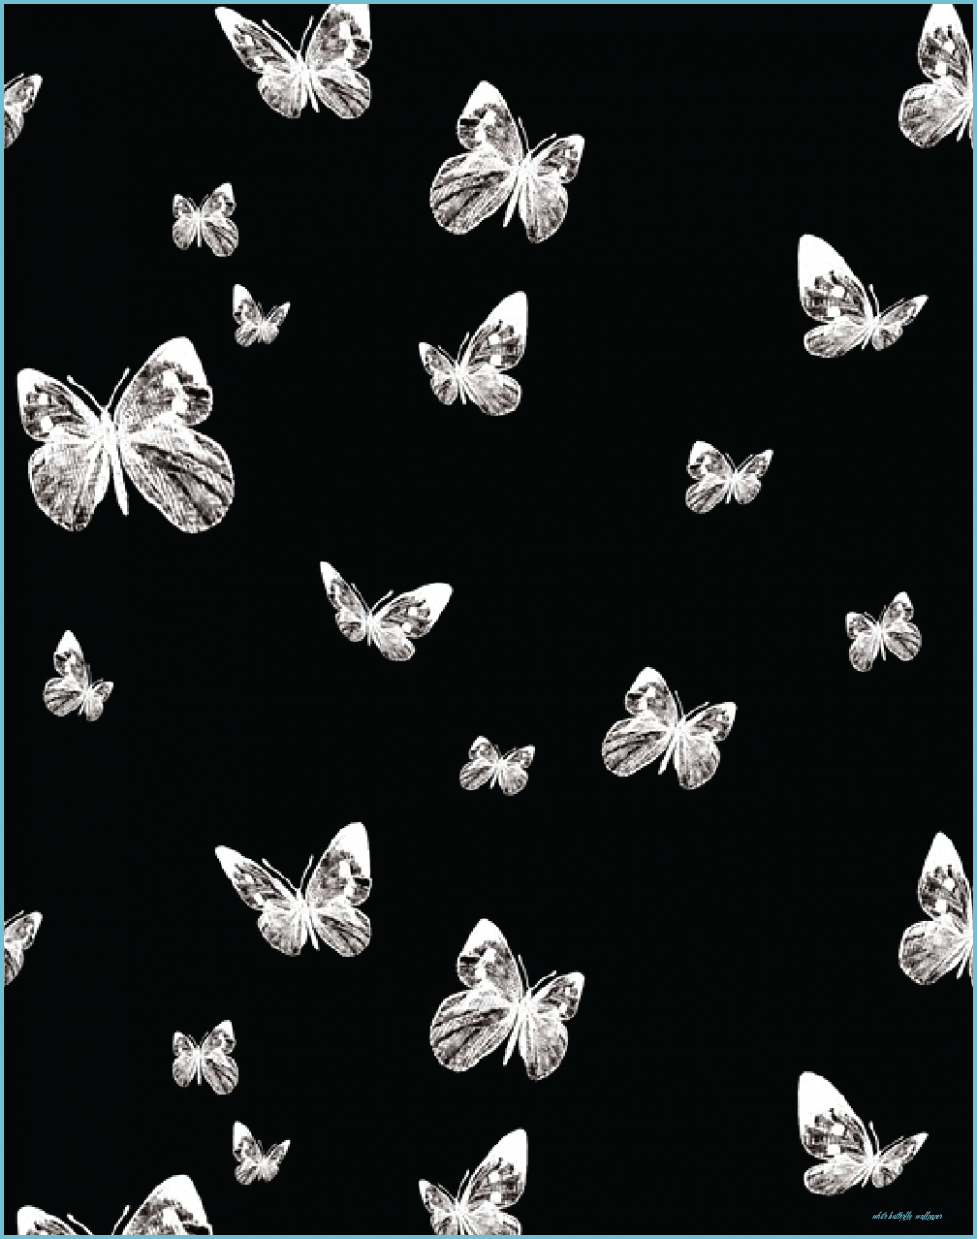 Butterfly Valley, Black & White Black Aesthetic Wallpaper, Black Butterfly Wallpaper